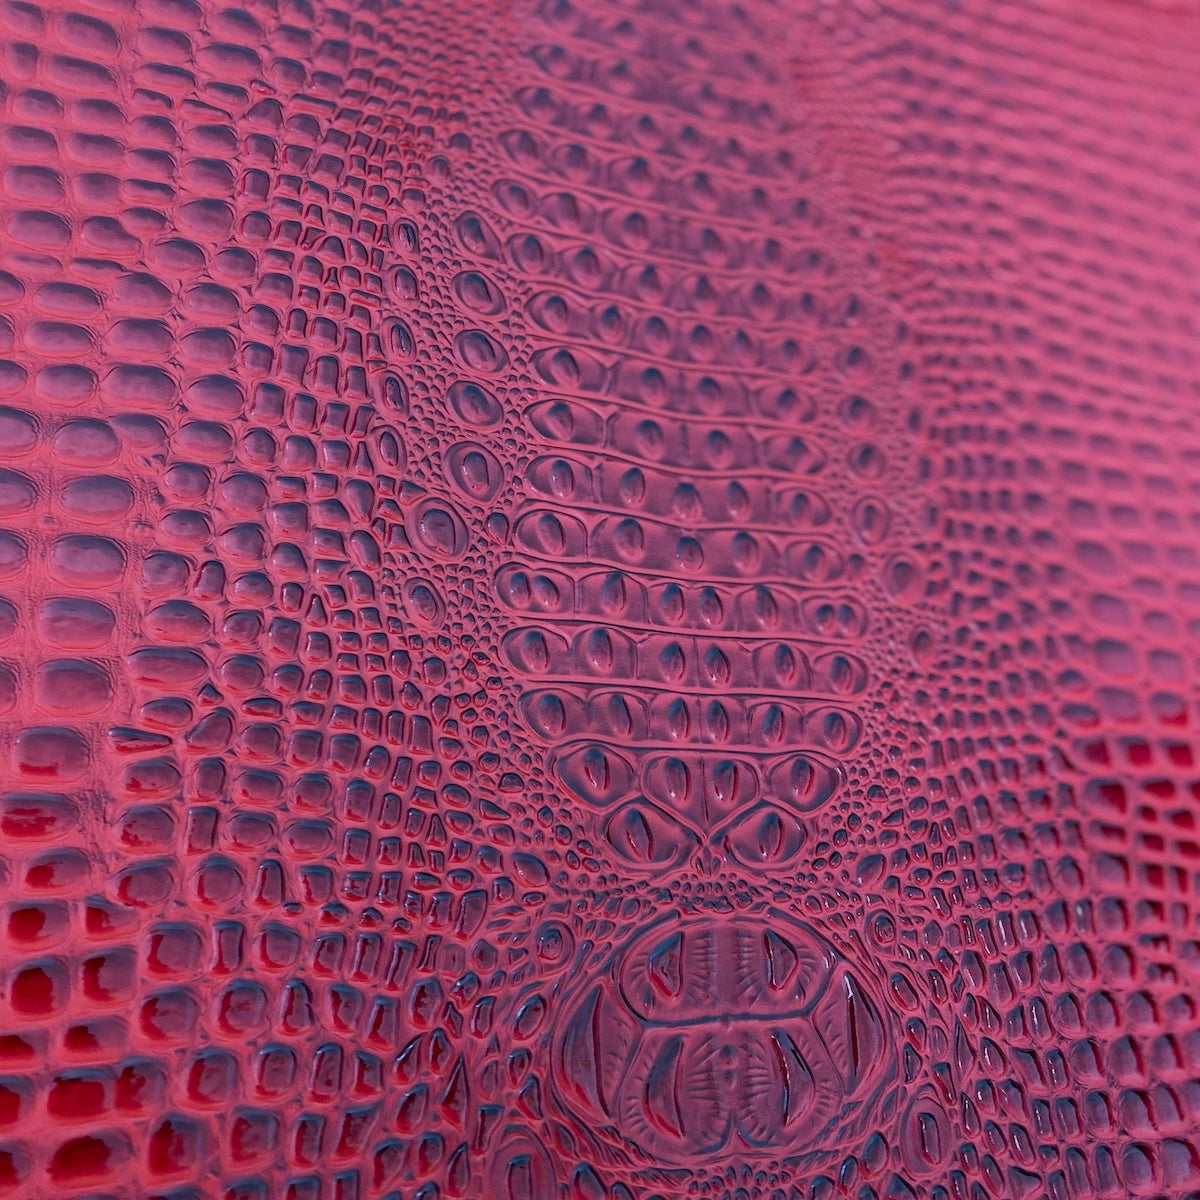 Fire Red Aussie 3D Embossed Gator Vinyl Fabric - Fashion Fabrics LLC